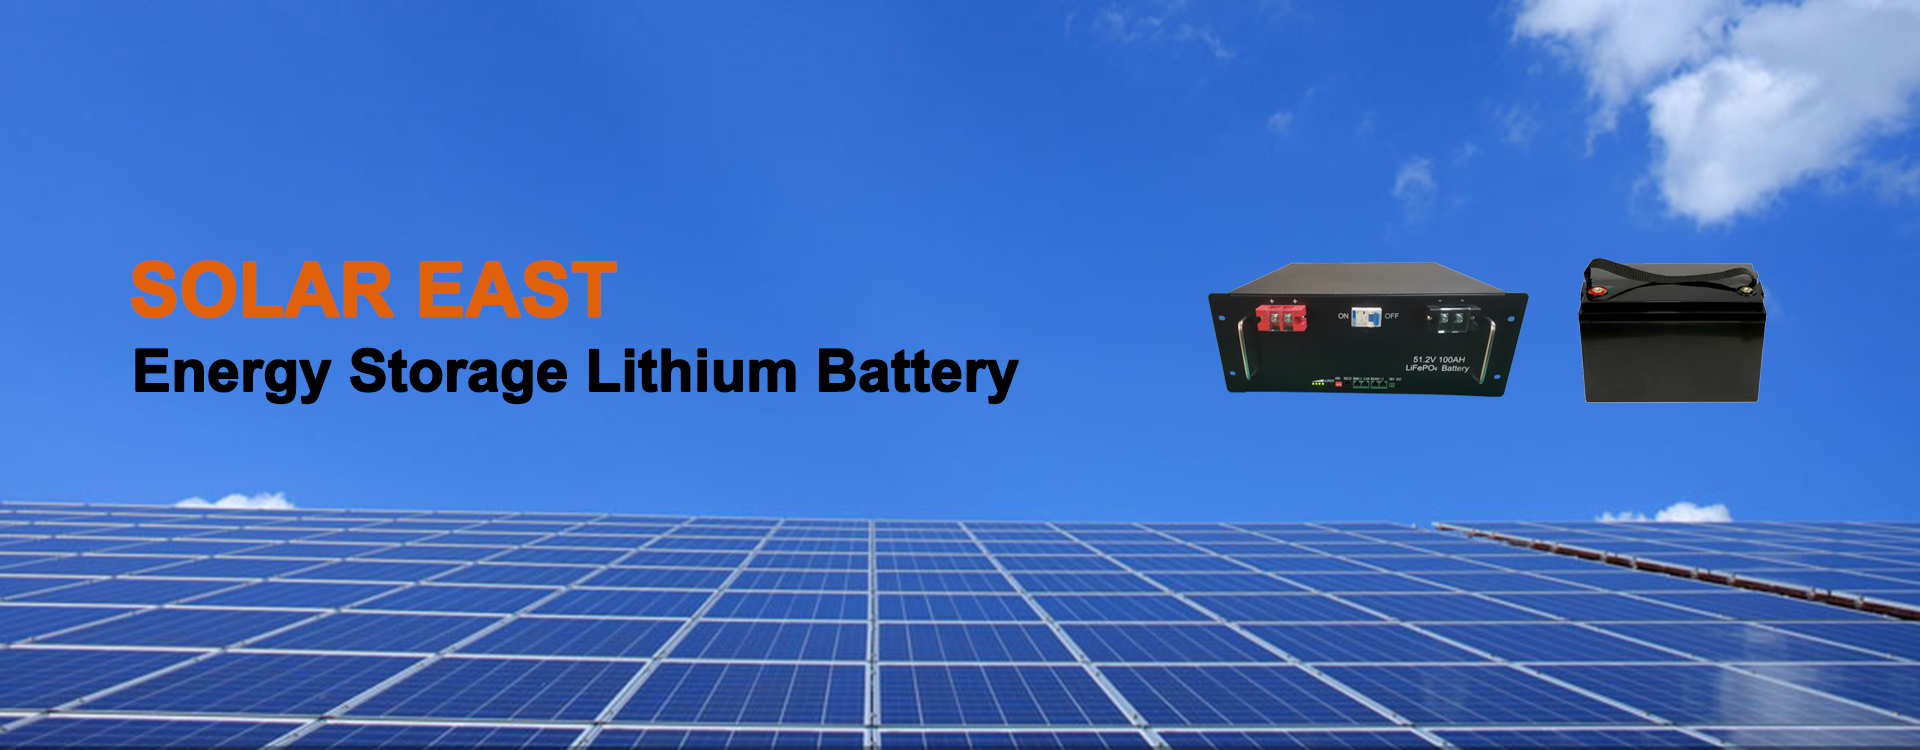 Energy Storage Liithium Battery